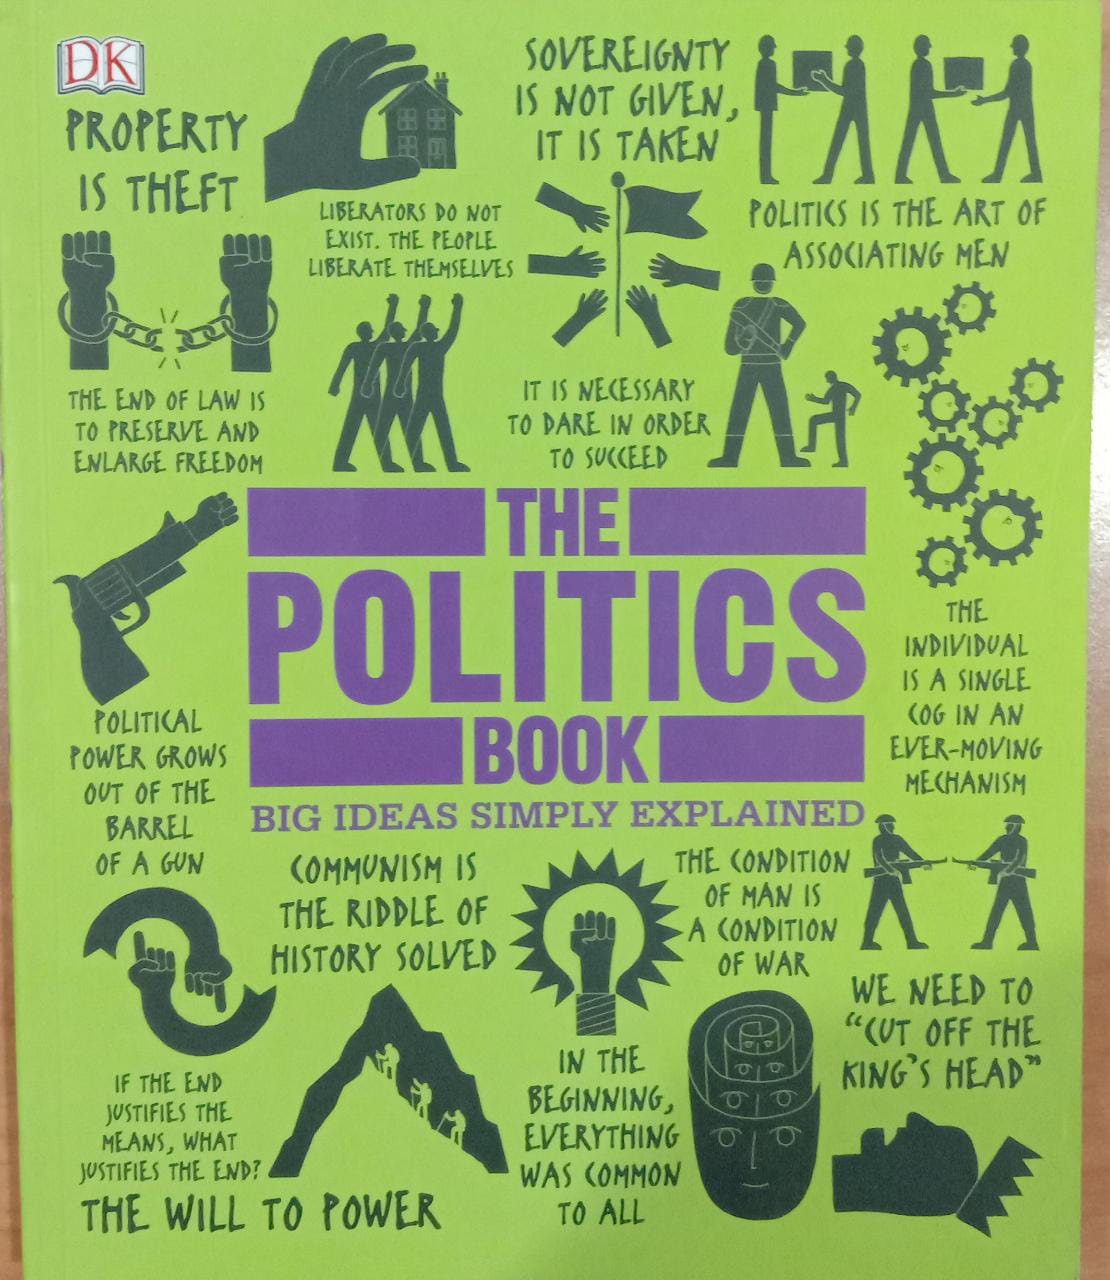 The Politics Book 
Big Ideas Simply Explained